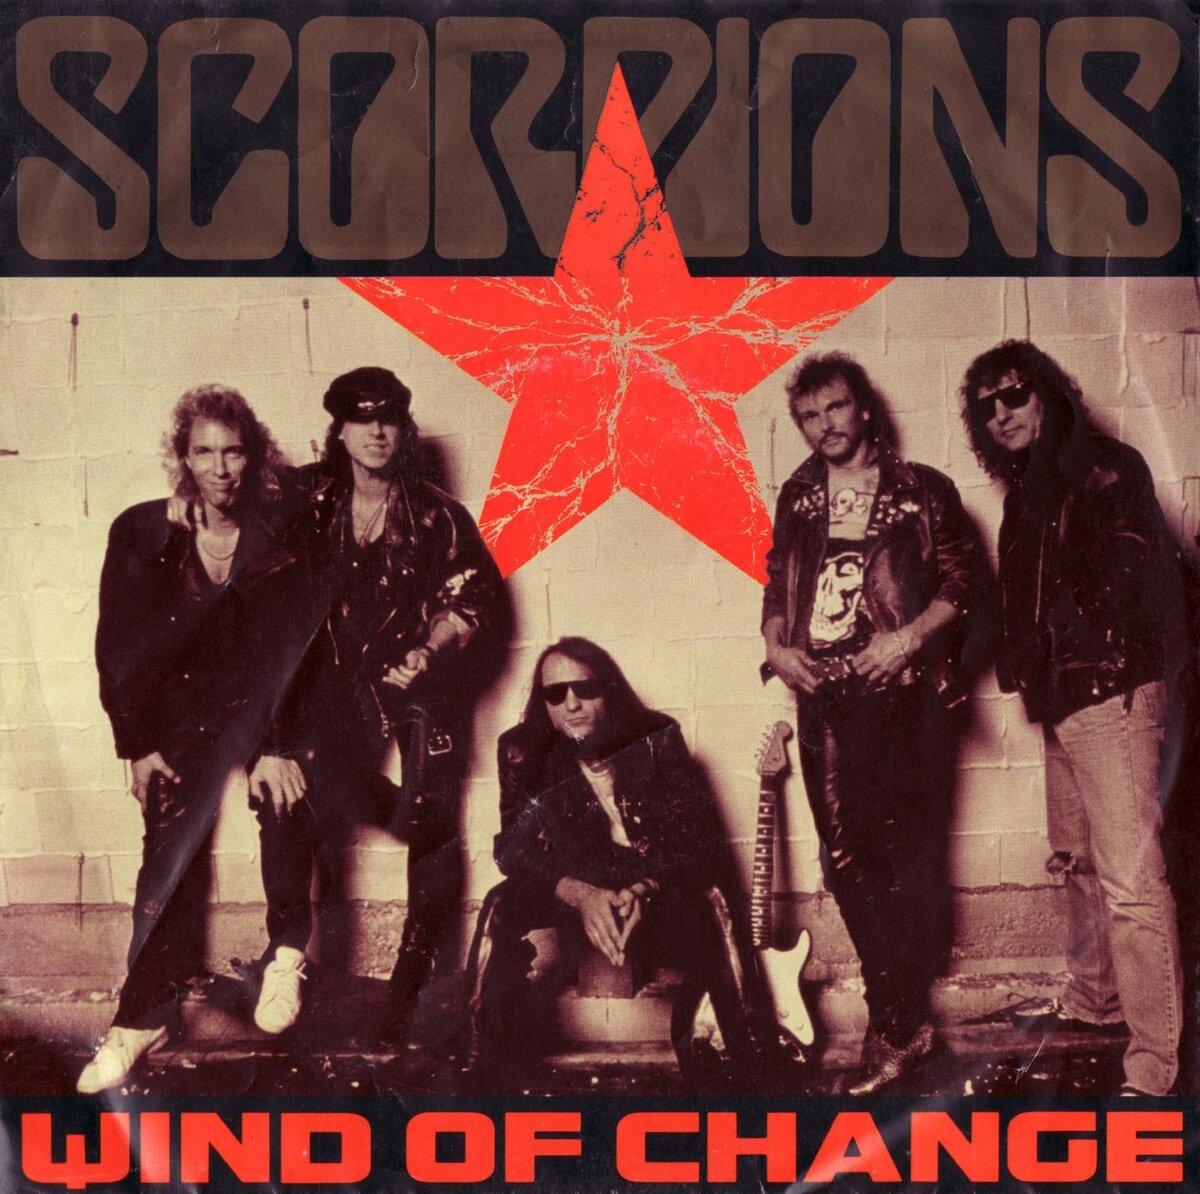 Scorpions Virgin Killer 1976 обложка. Scorpions 1975. Scorpions Wind of change обложка. Альбом Virgin Killer Scorpions. Песни скорпионс ветер перемен